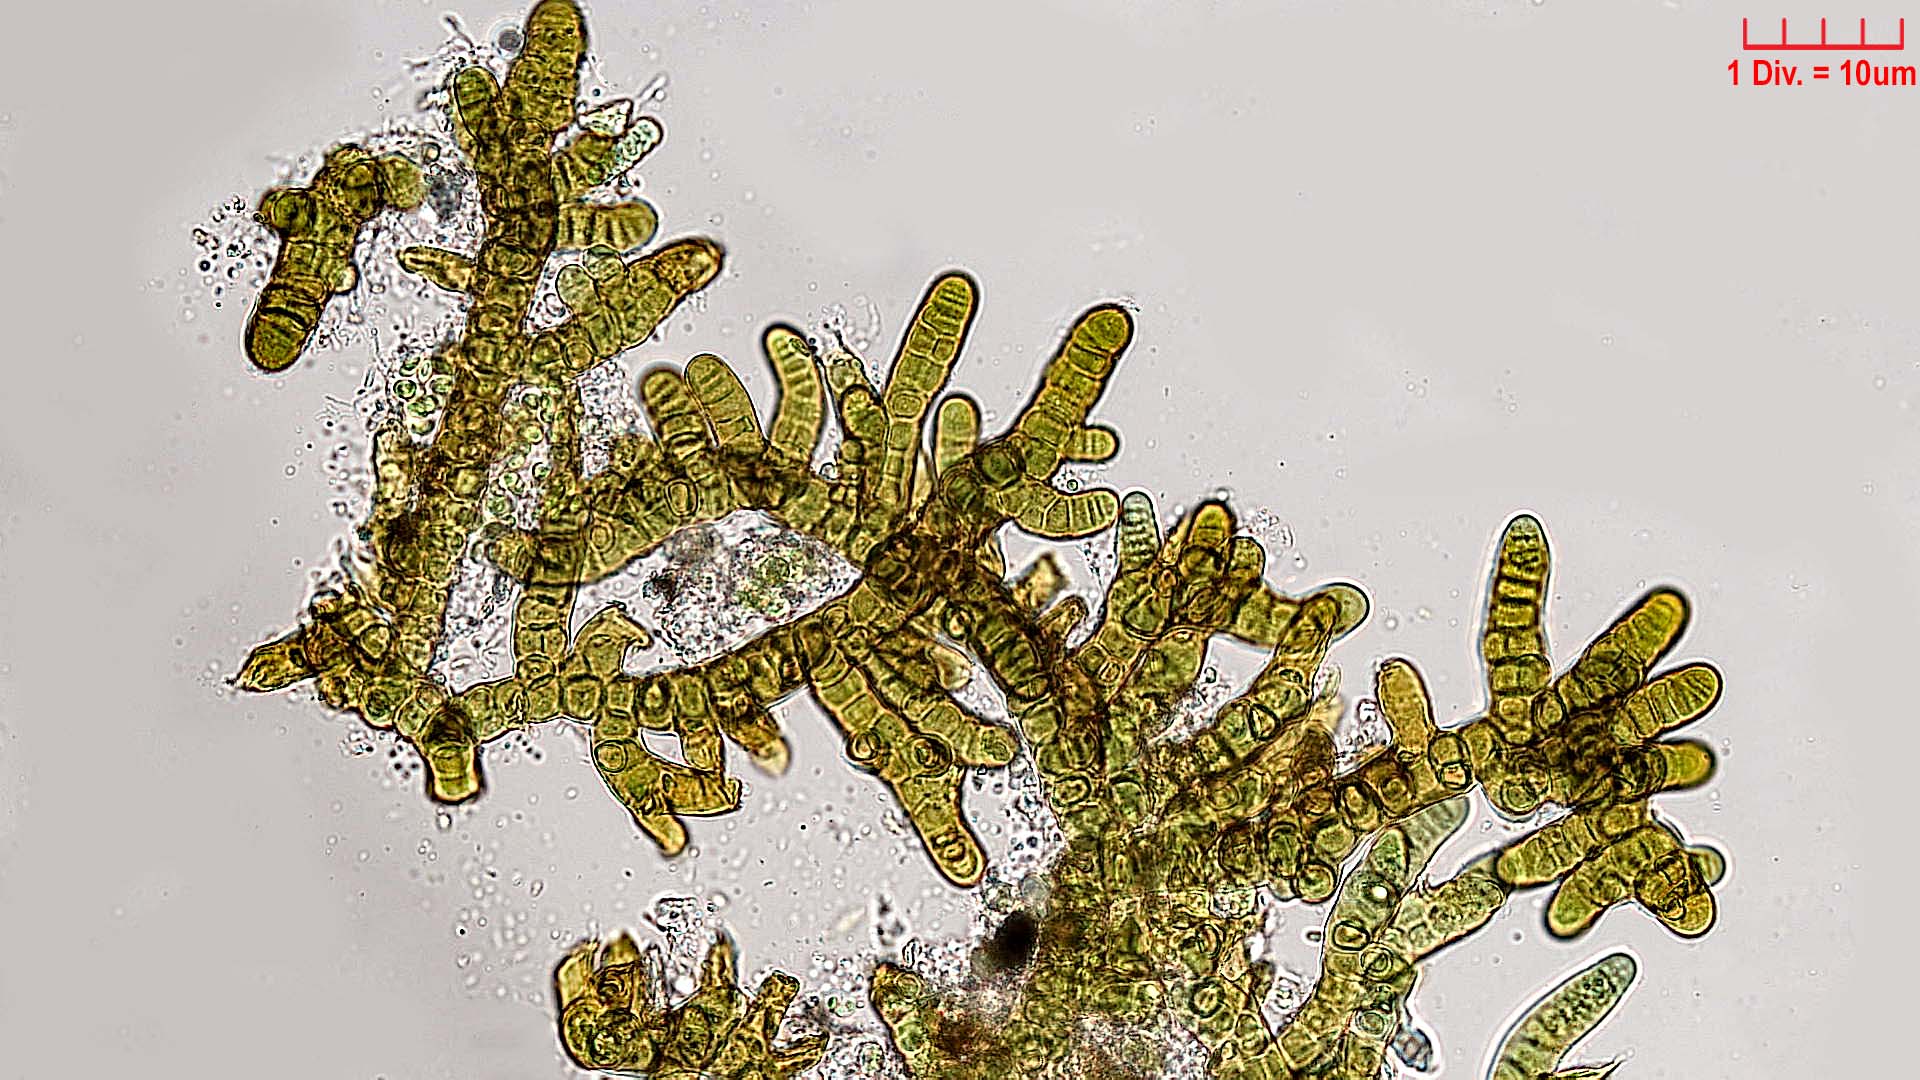 ./././Cyanobacteria/Nostocales/Stigonemataceae/Stigonema/minutum/stigonema-minutum-533.jpg